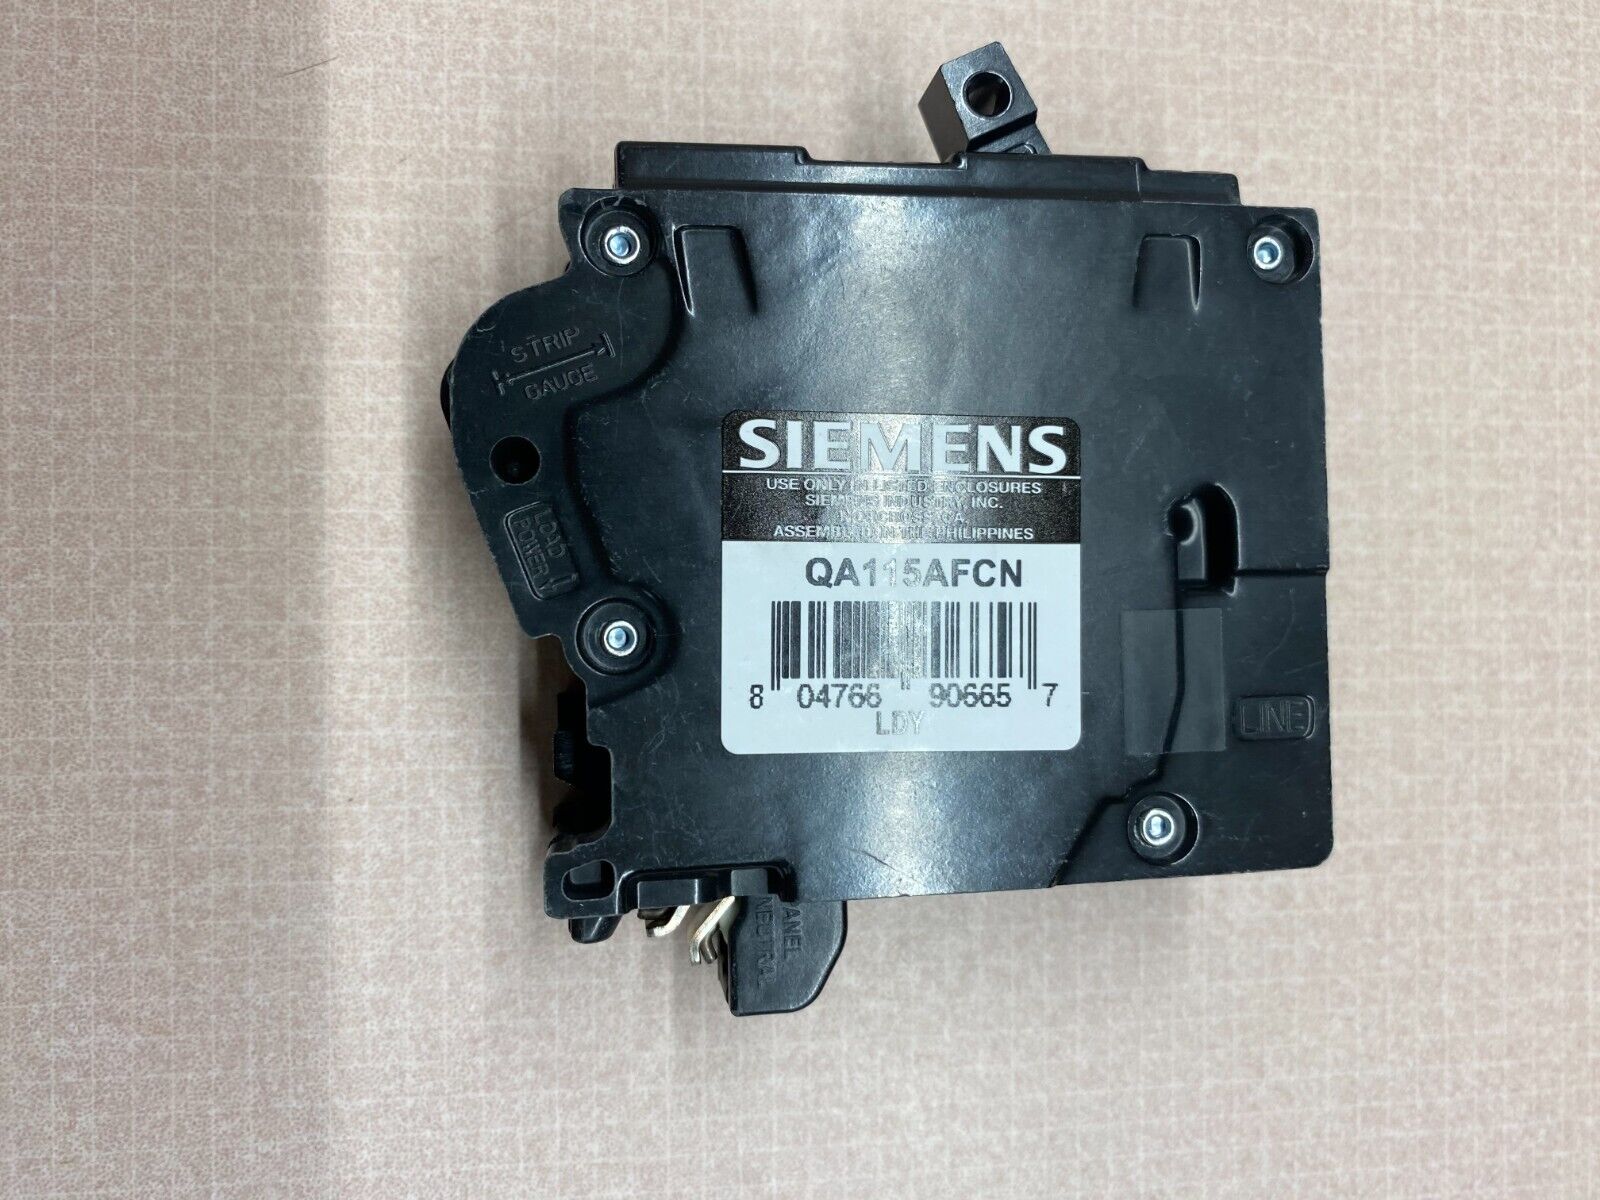 Box of 10 - Siemens QA115AFCN 15A 1-Pole Plug-On Neutral Circuit Breaker - Black